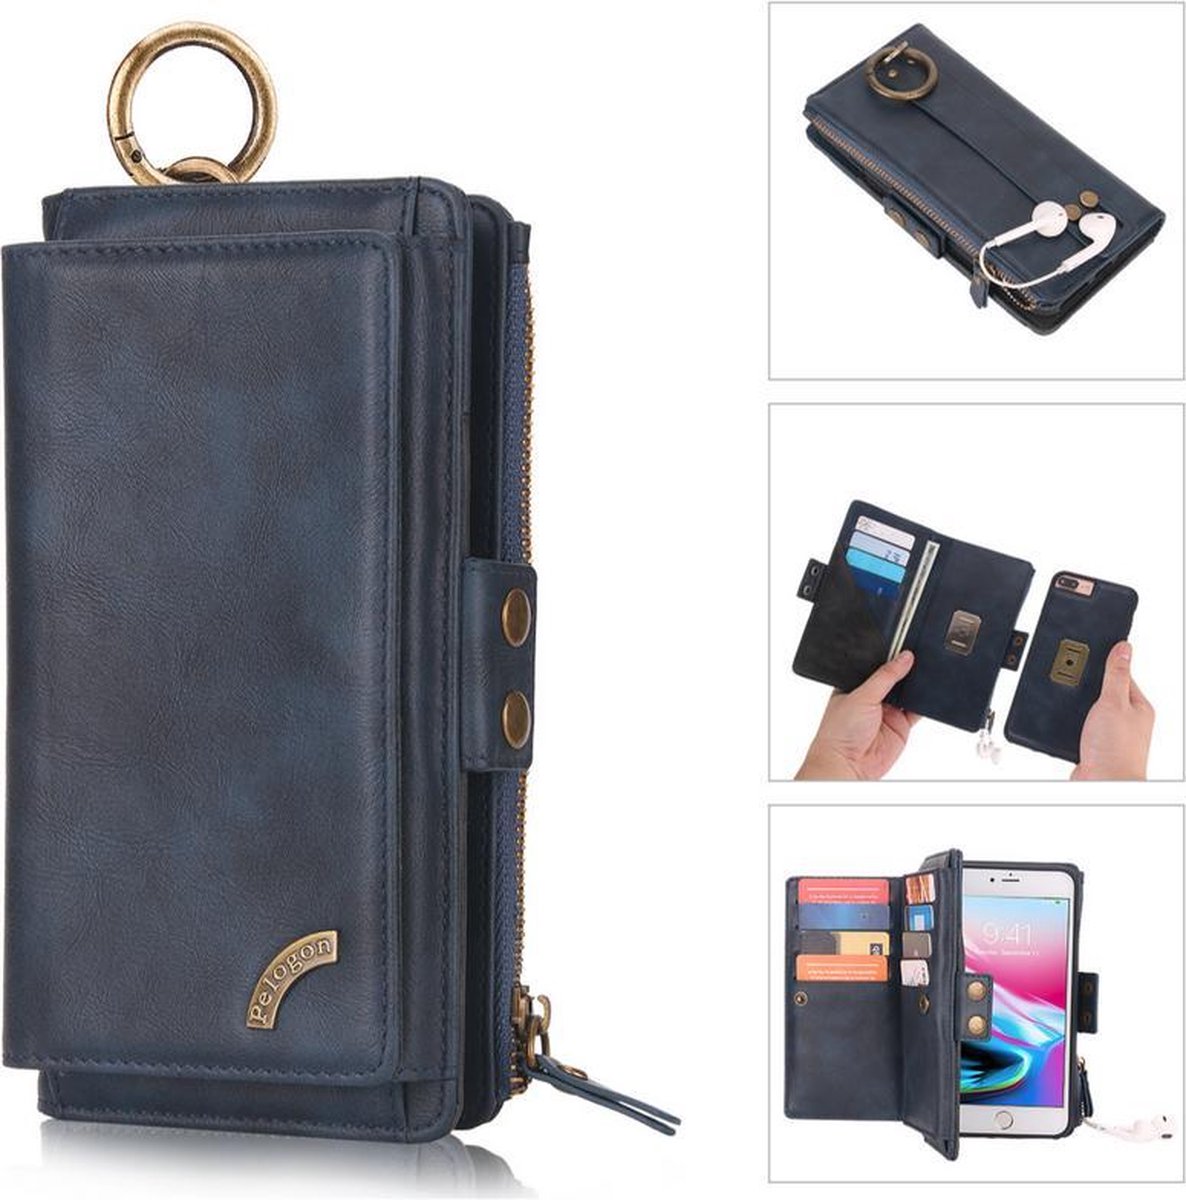 Samsung Galaxy S20 Pelogon Luxe/Hoesje/Portemonnee/Boekhoesje/Bookcase voor 12 pasjes bruikbaar donkerblauw